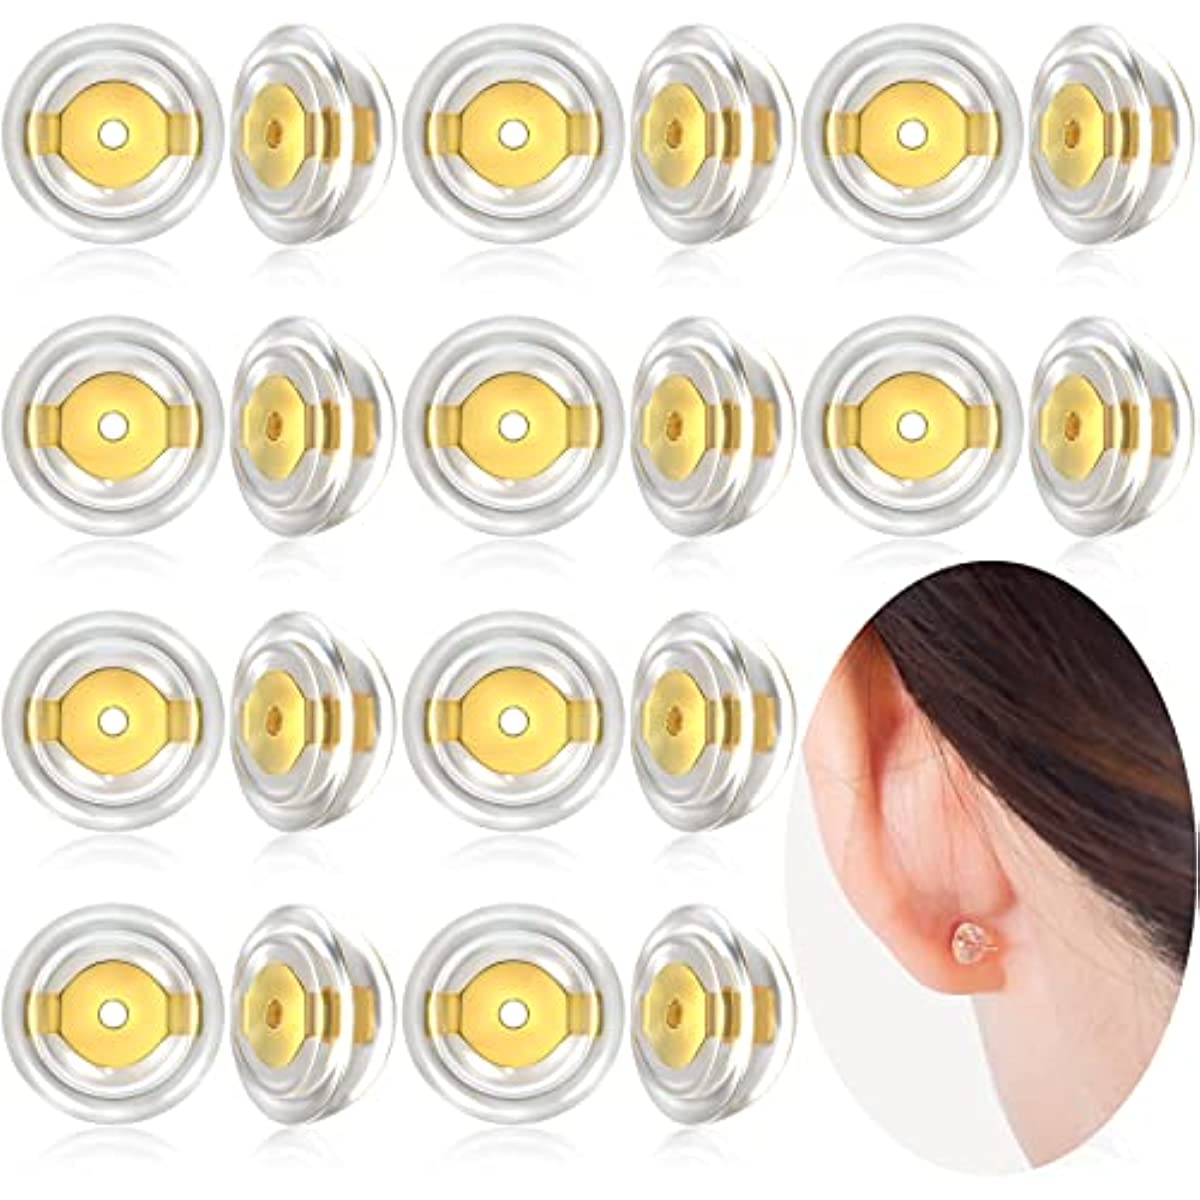 100pcs Diy Earring Hook French Hook Ball Dot Earwires Earrings Backs For  Jewelry Earring Making Materials